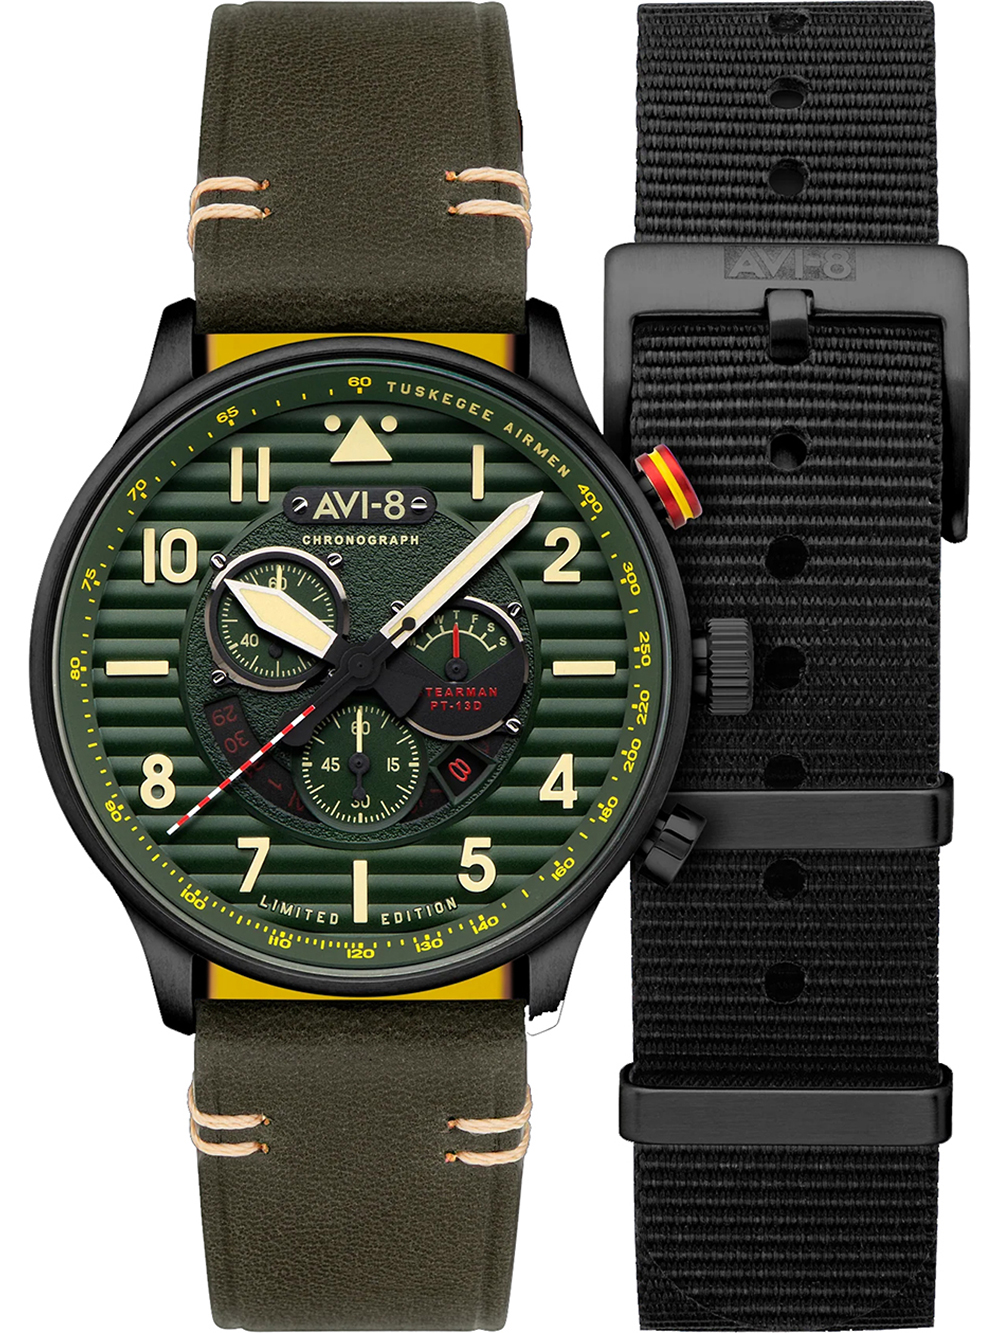 Pánské hodinky AVI-8 AV-4109-04 Mens Watch Flyboy Spirit of Tuskegee Limited Chrono 44mm 5ATM